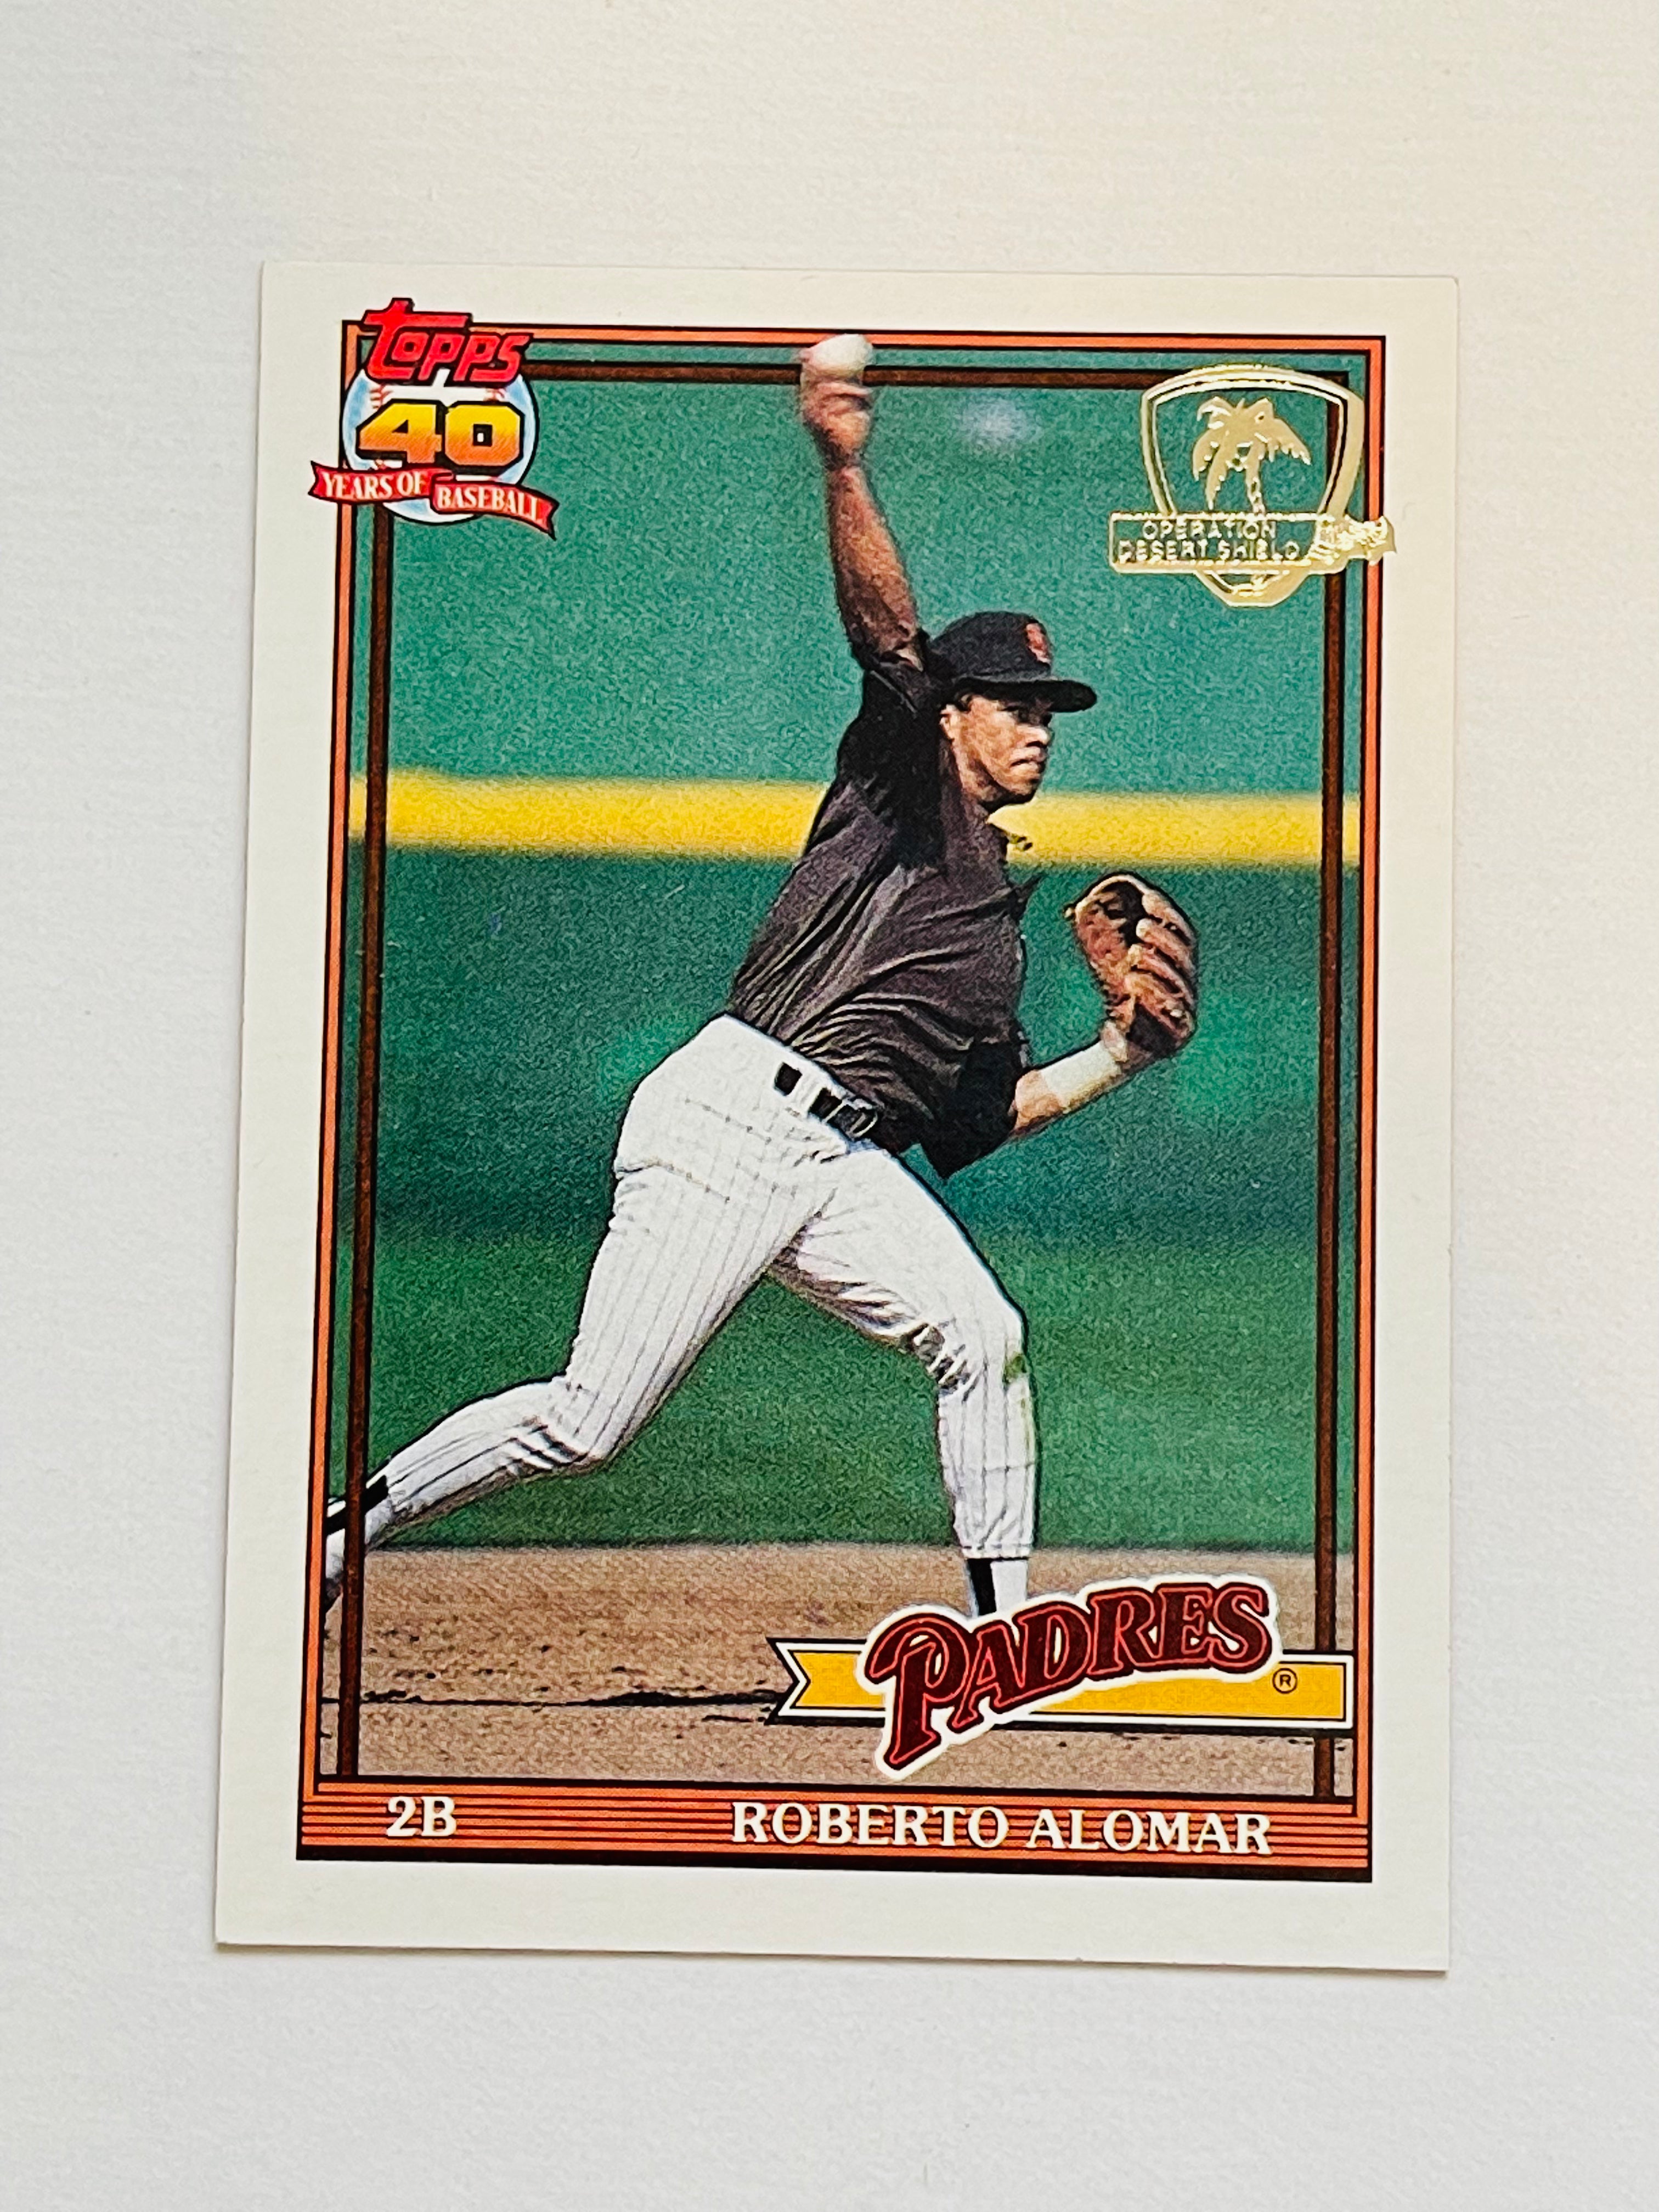 Roberto Alomar rare Desert storm stamped baseball card